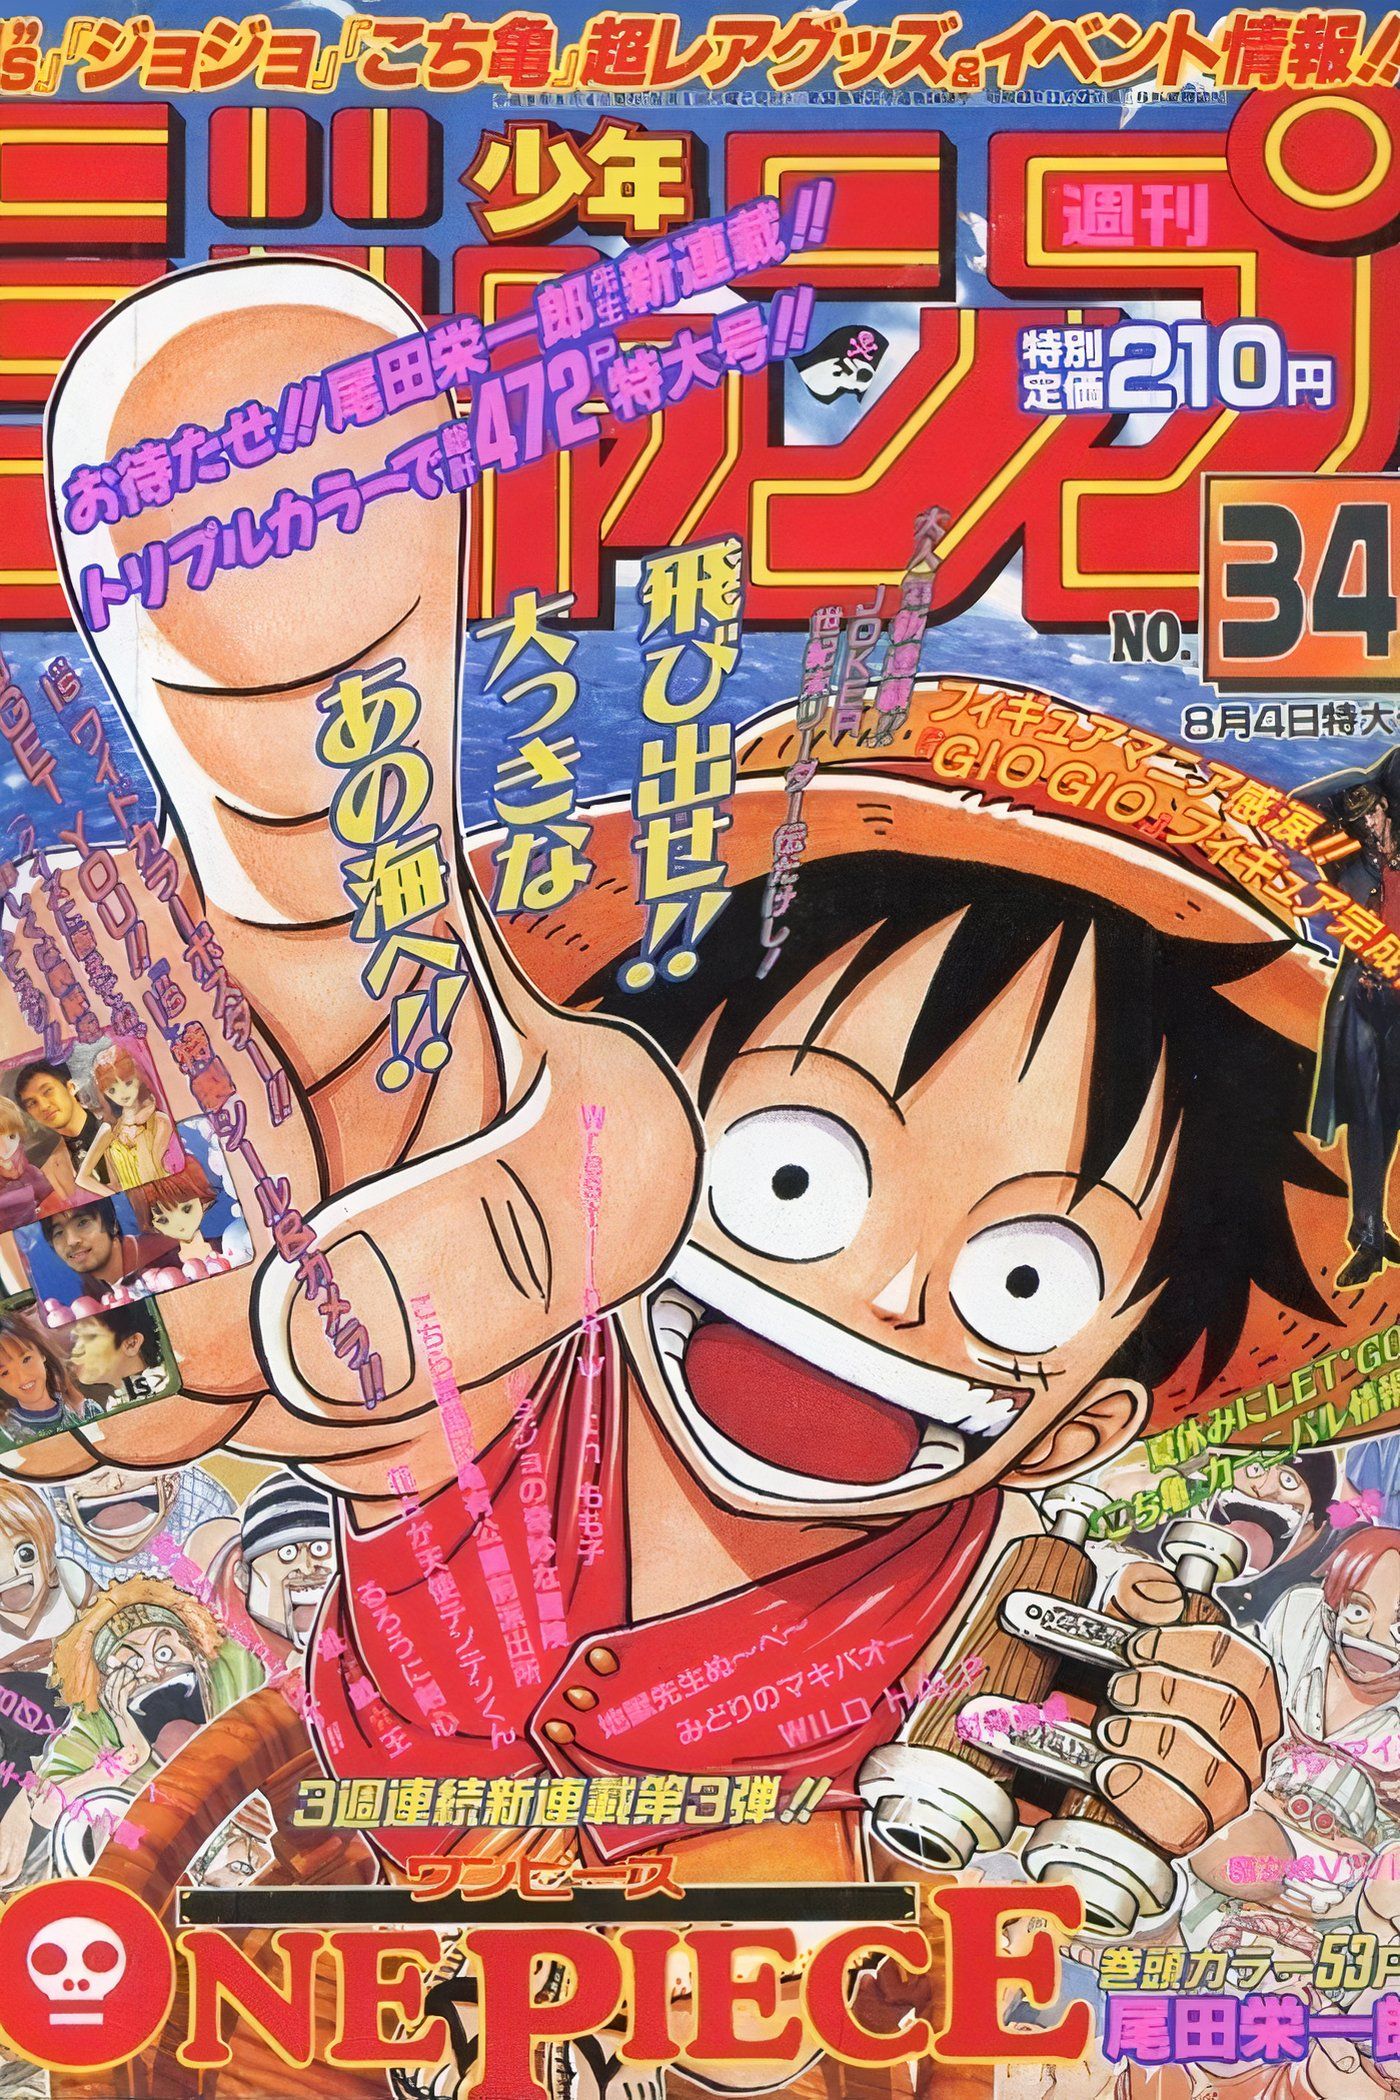 One Piece Weekly Shonen Jump Capa #1458 Monkey D. Luffy sorrindo